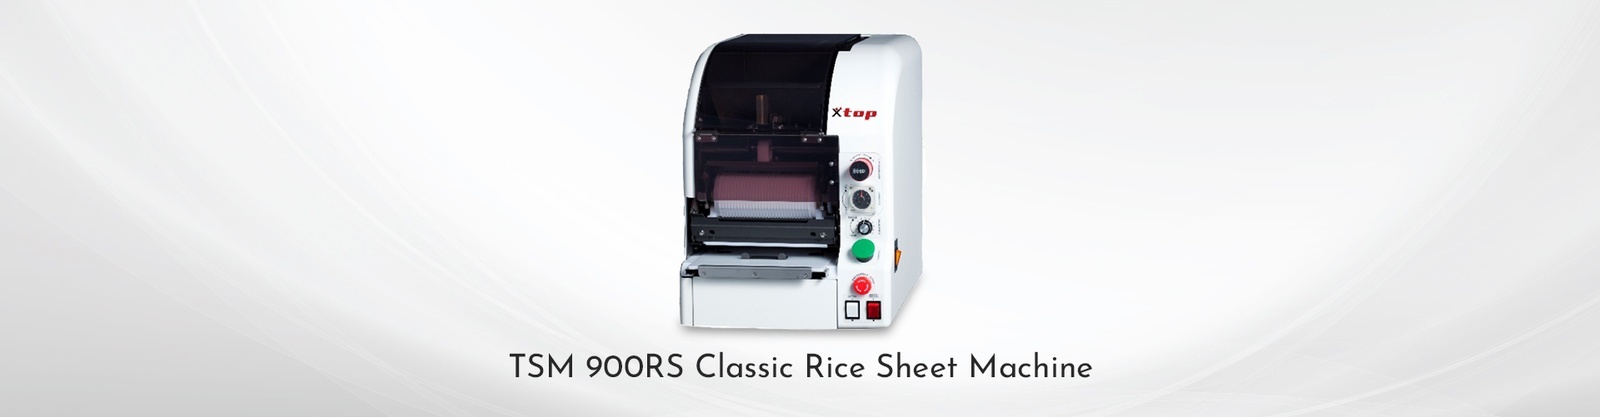 TSM 900RS Classic Rice Sheet Machine